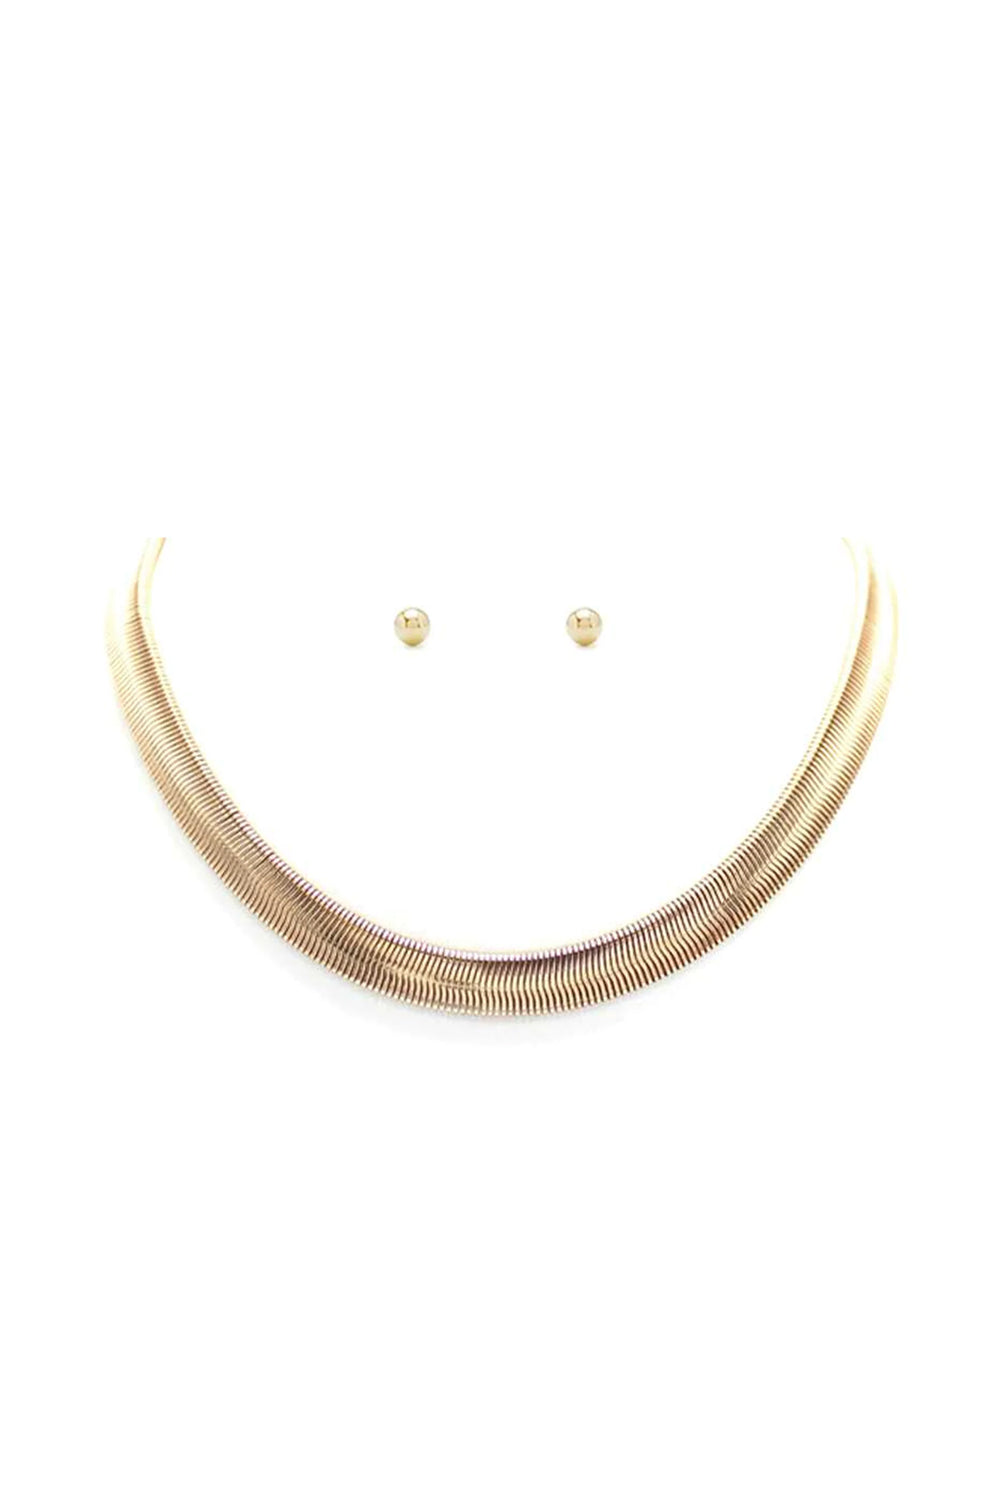 Gold Metal Chain Women's Necklace Earring Set